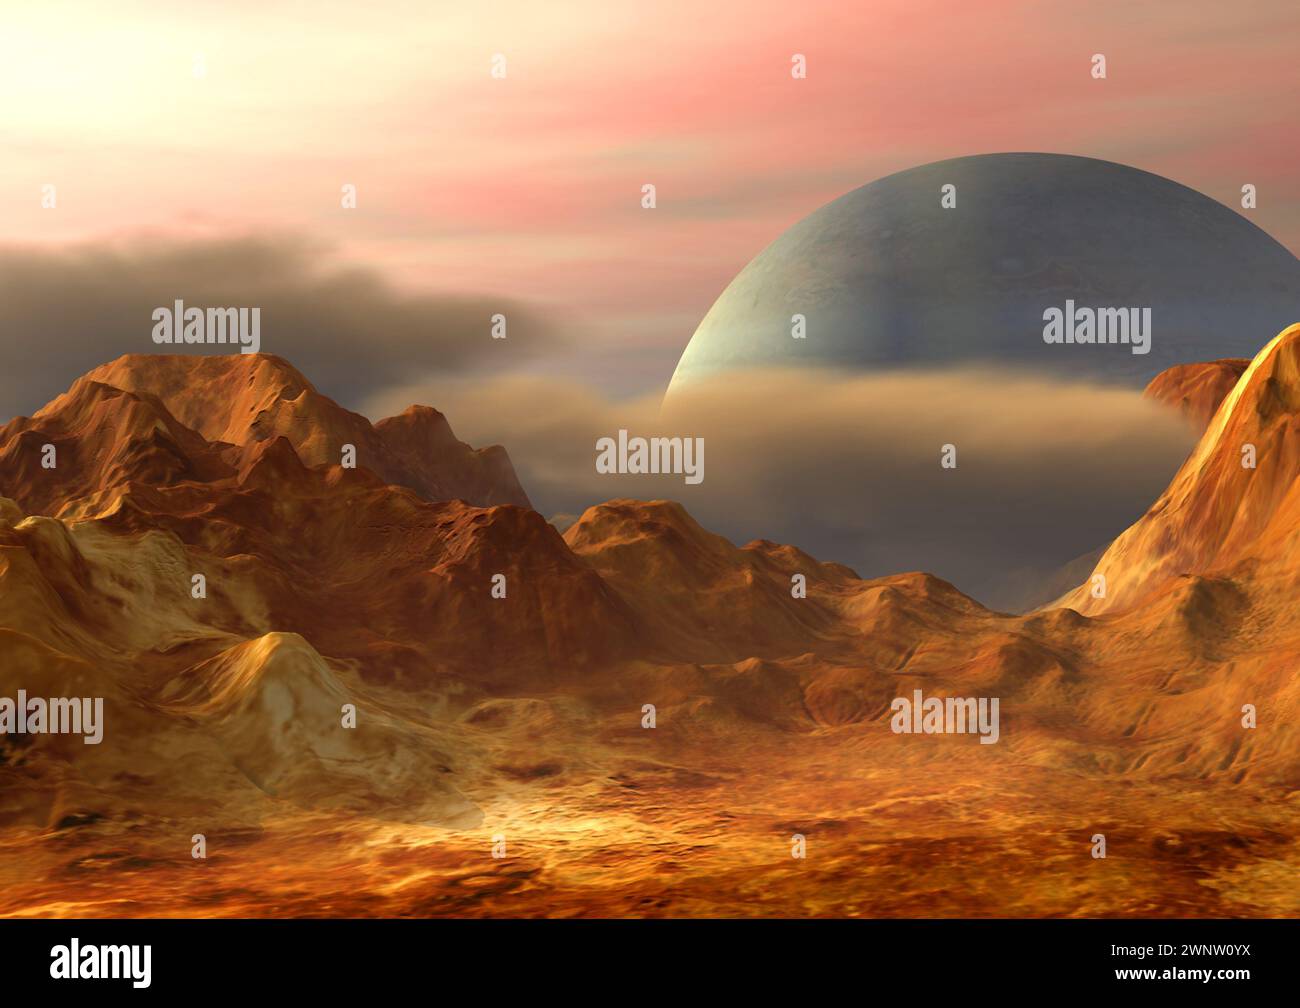 Imaginary landscape on a distant planet. Digital illustration Stock Photo